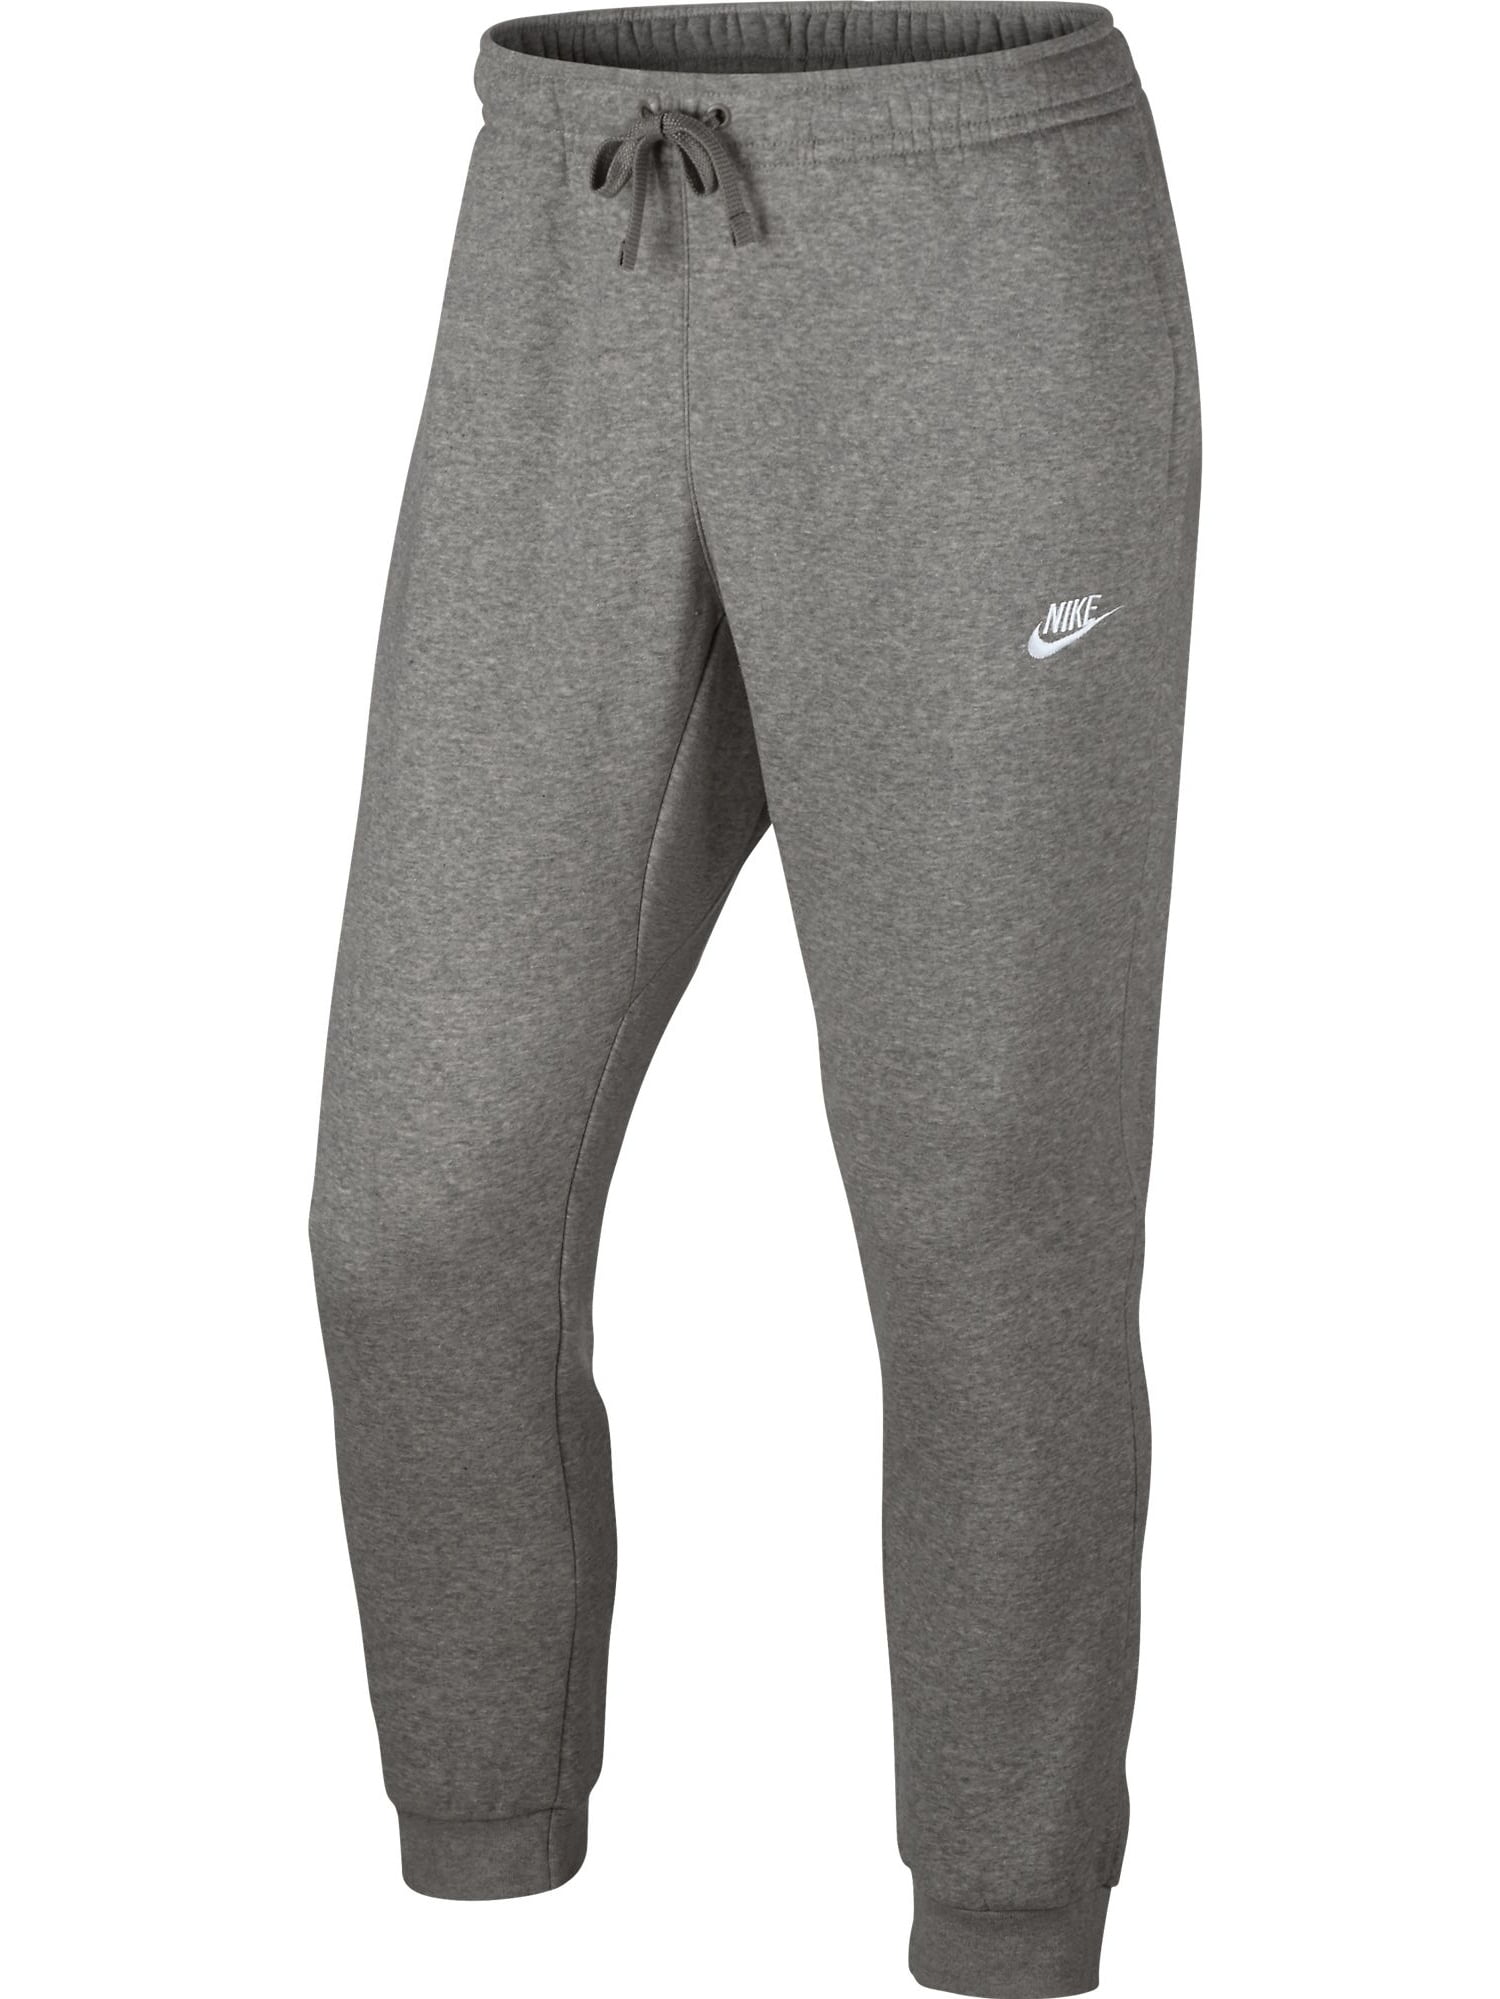 Club Sportswear Pants Grey/White 804408-063 - Walmart.com